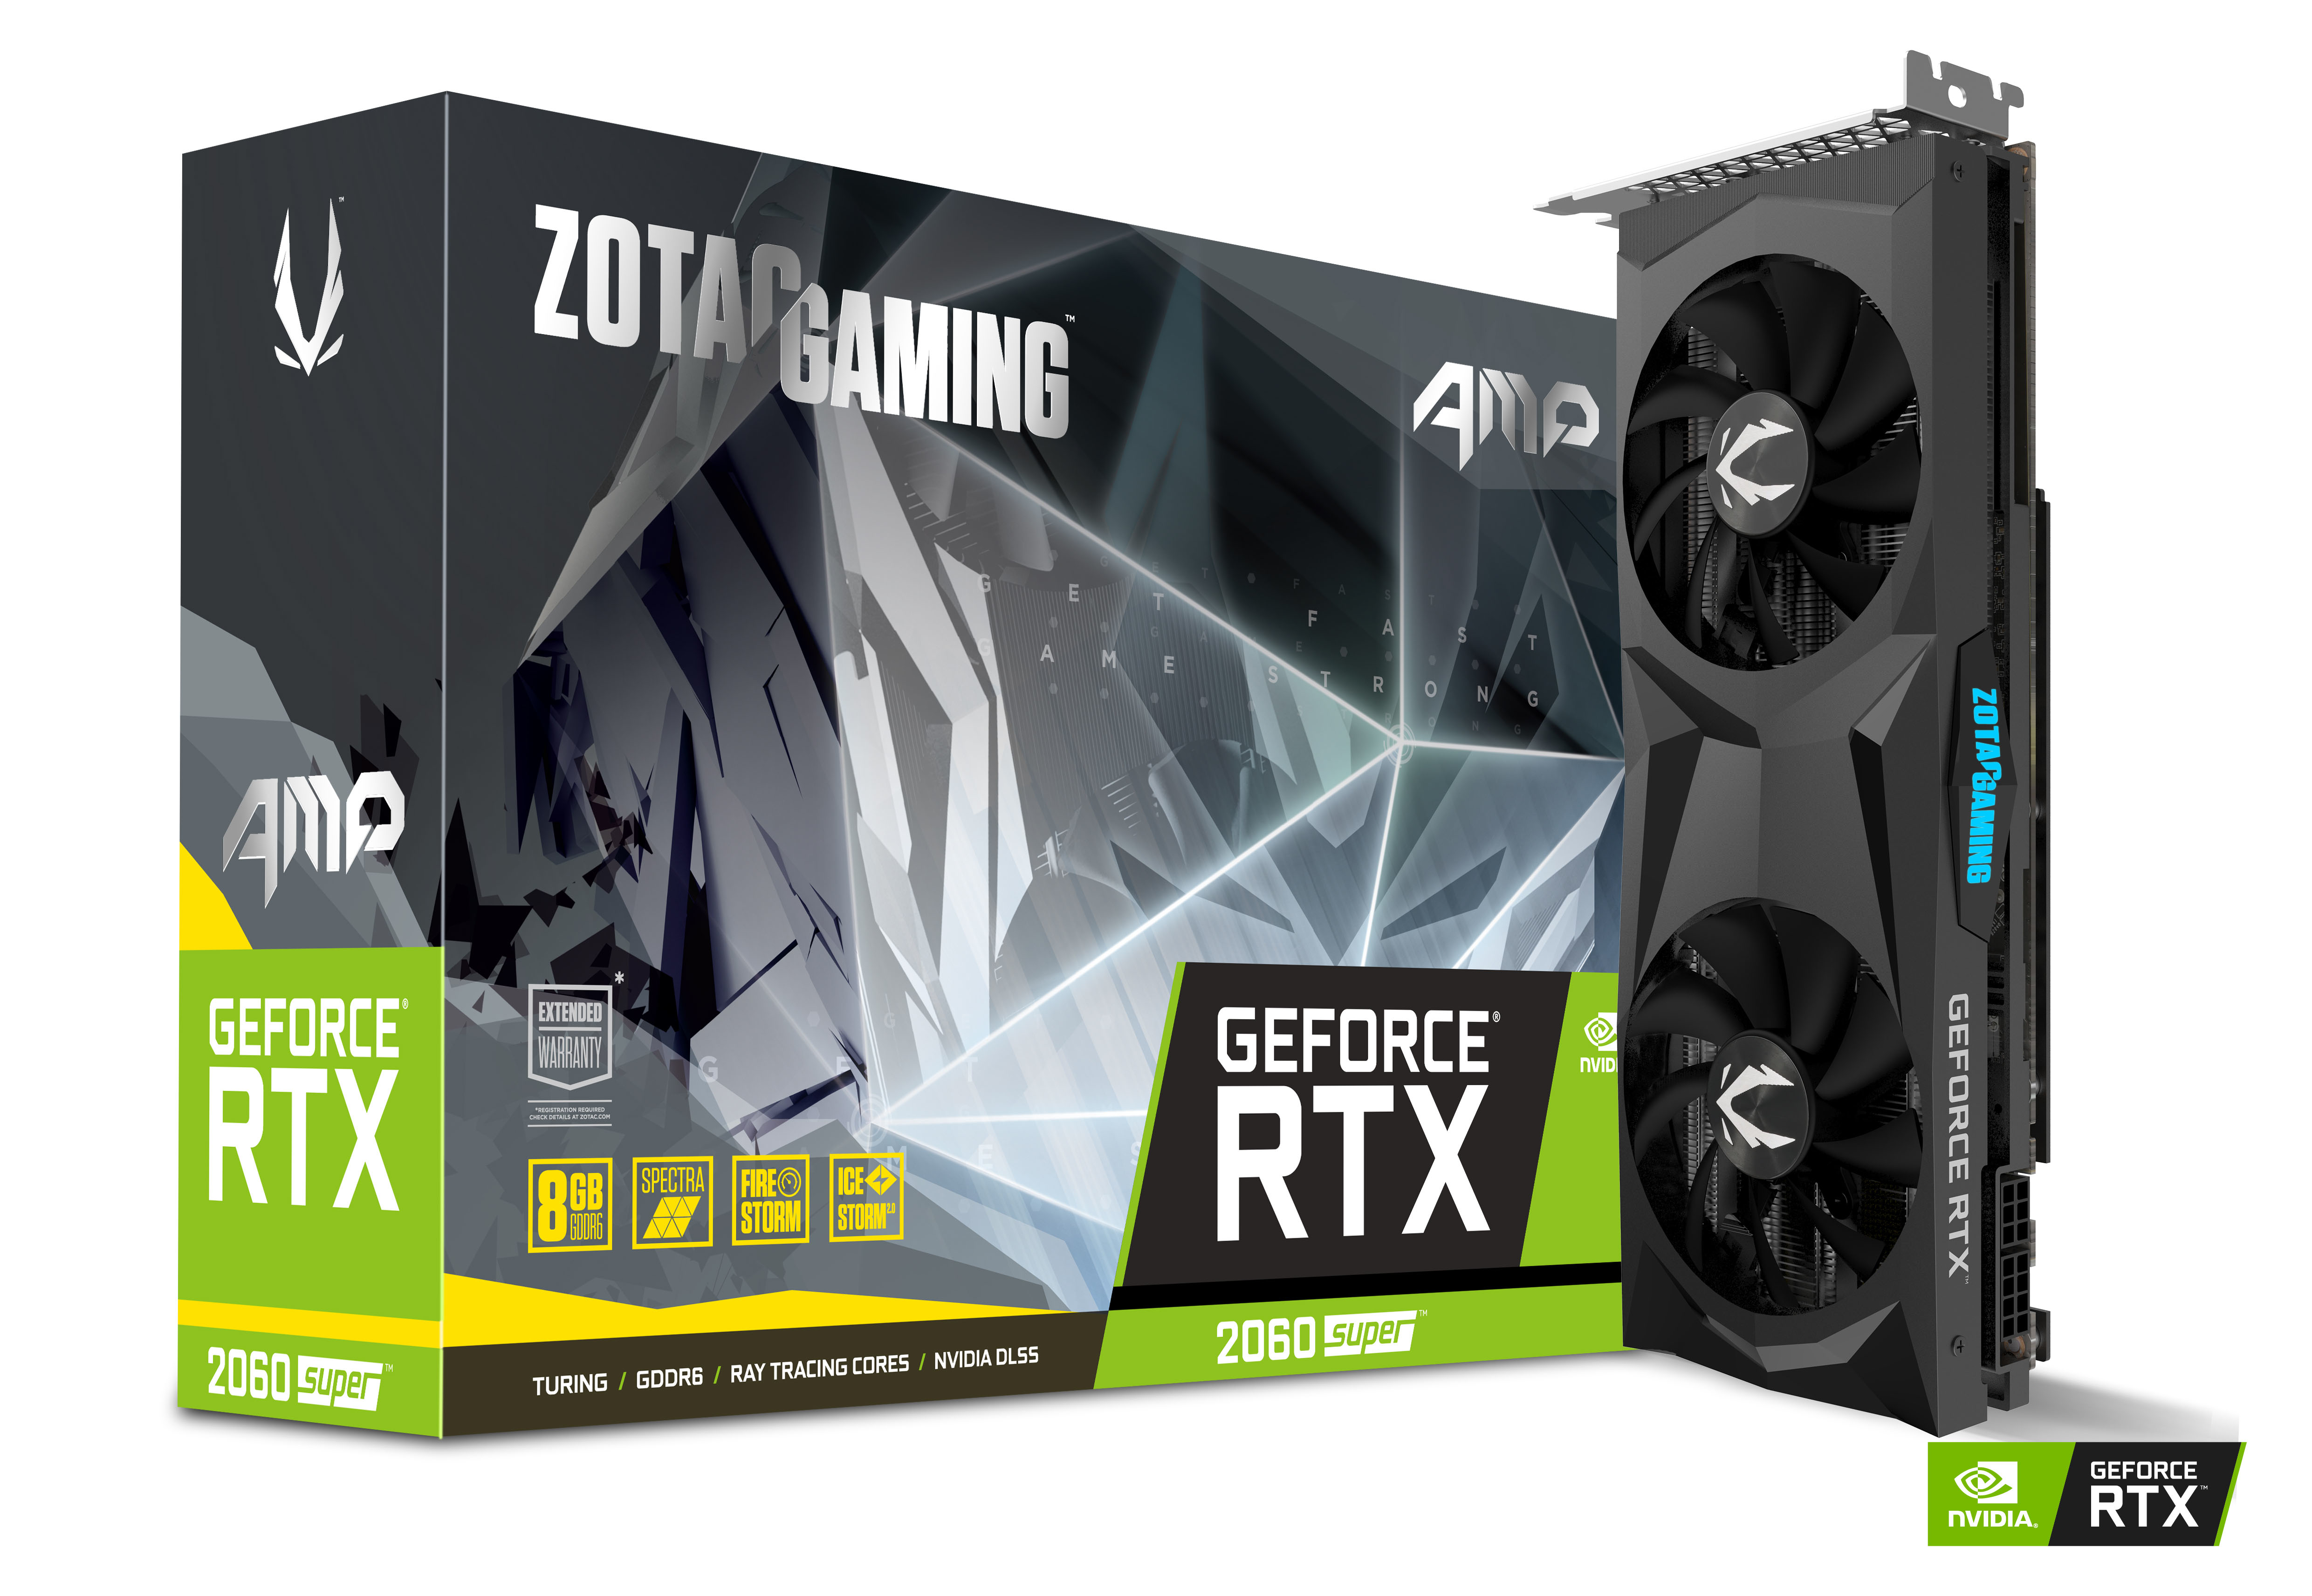 ZOTAC GAMING GeForce RTX 2060 SUPER AMP | ZOTAC